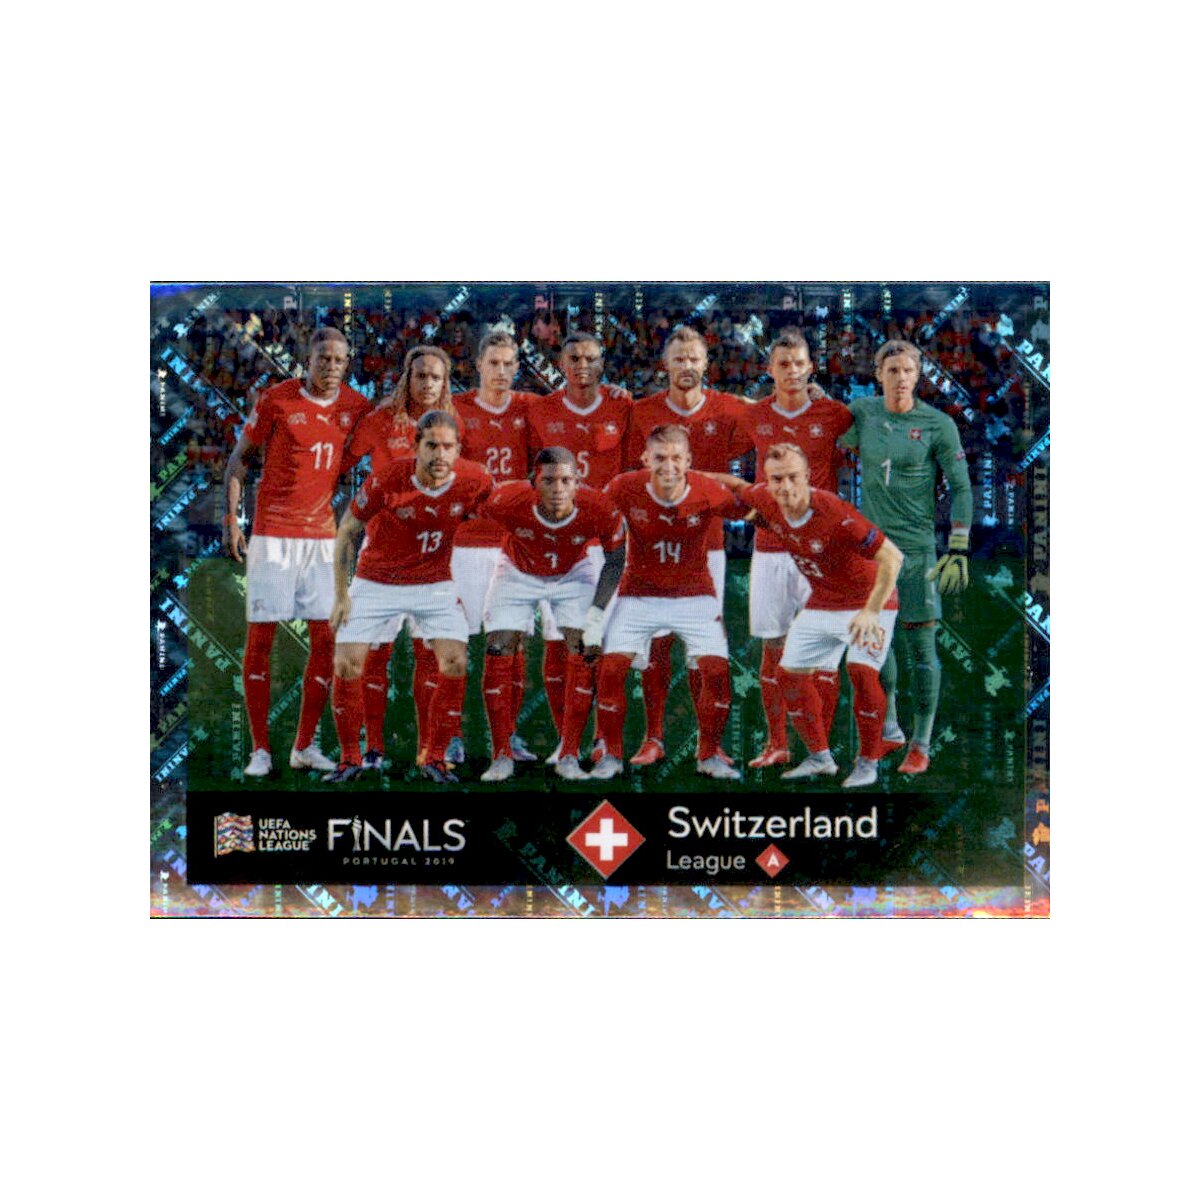 Team Bild schweiz - UEFA Nations League Road to EM 2020 Sticker 454